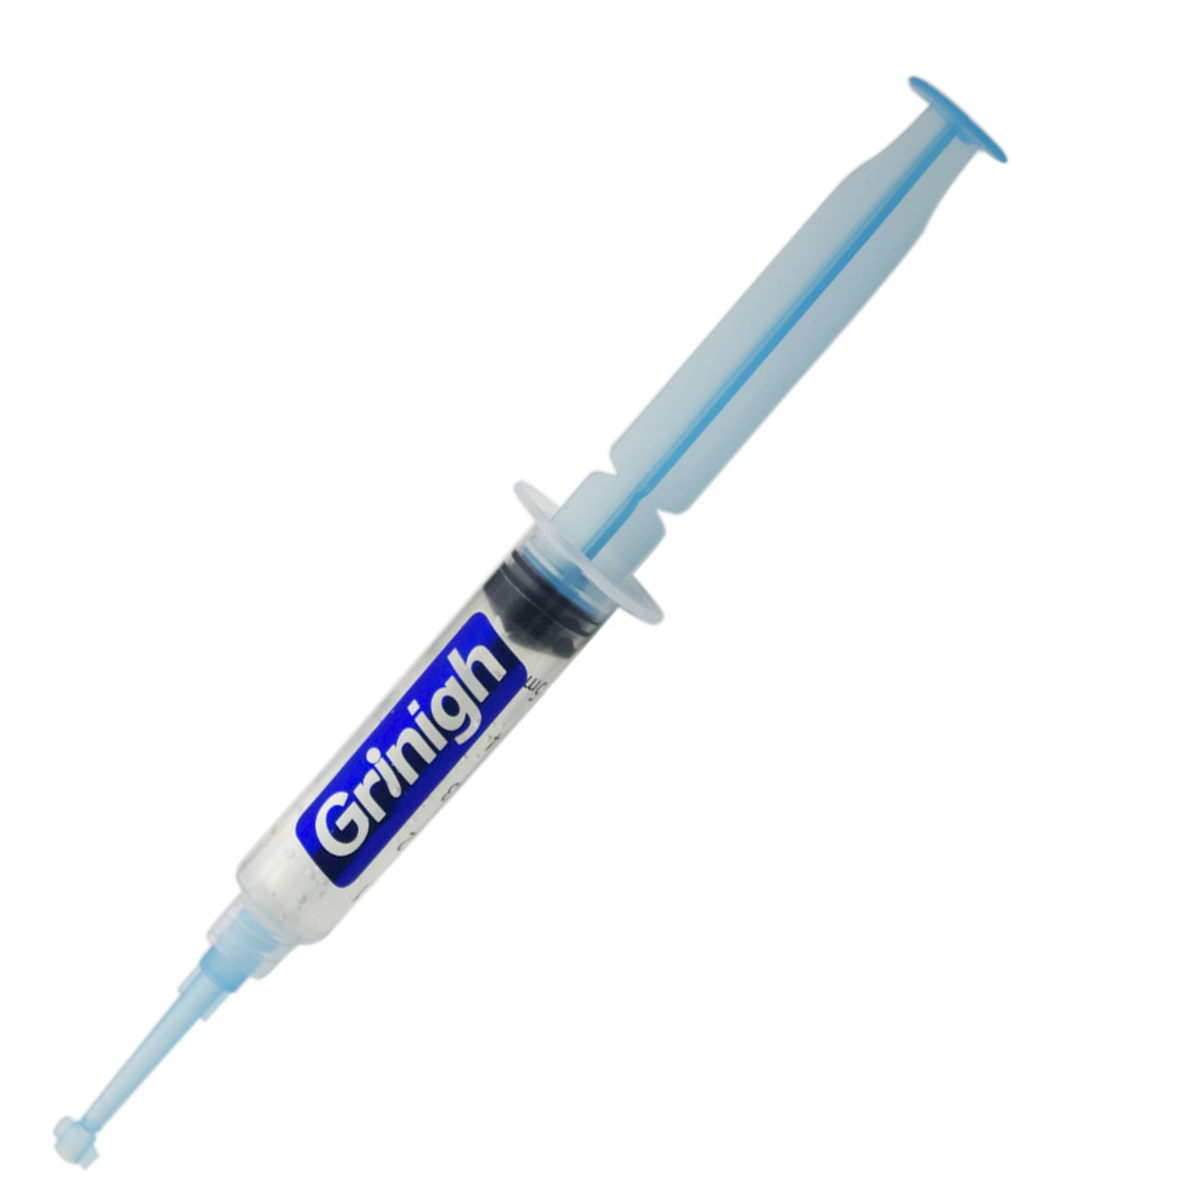 Grin365 Onvoorwaardelijke Expressions Teeth Whitening System - Deluxe Kit met LED-licht, remineralisatie Gel, VE Swabs, en Whitening Pen